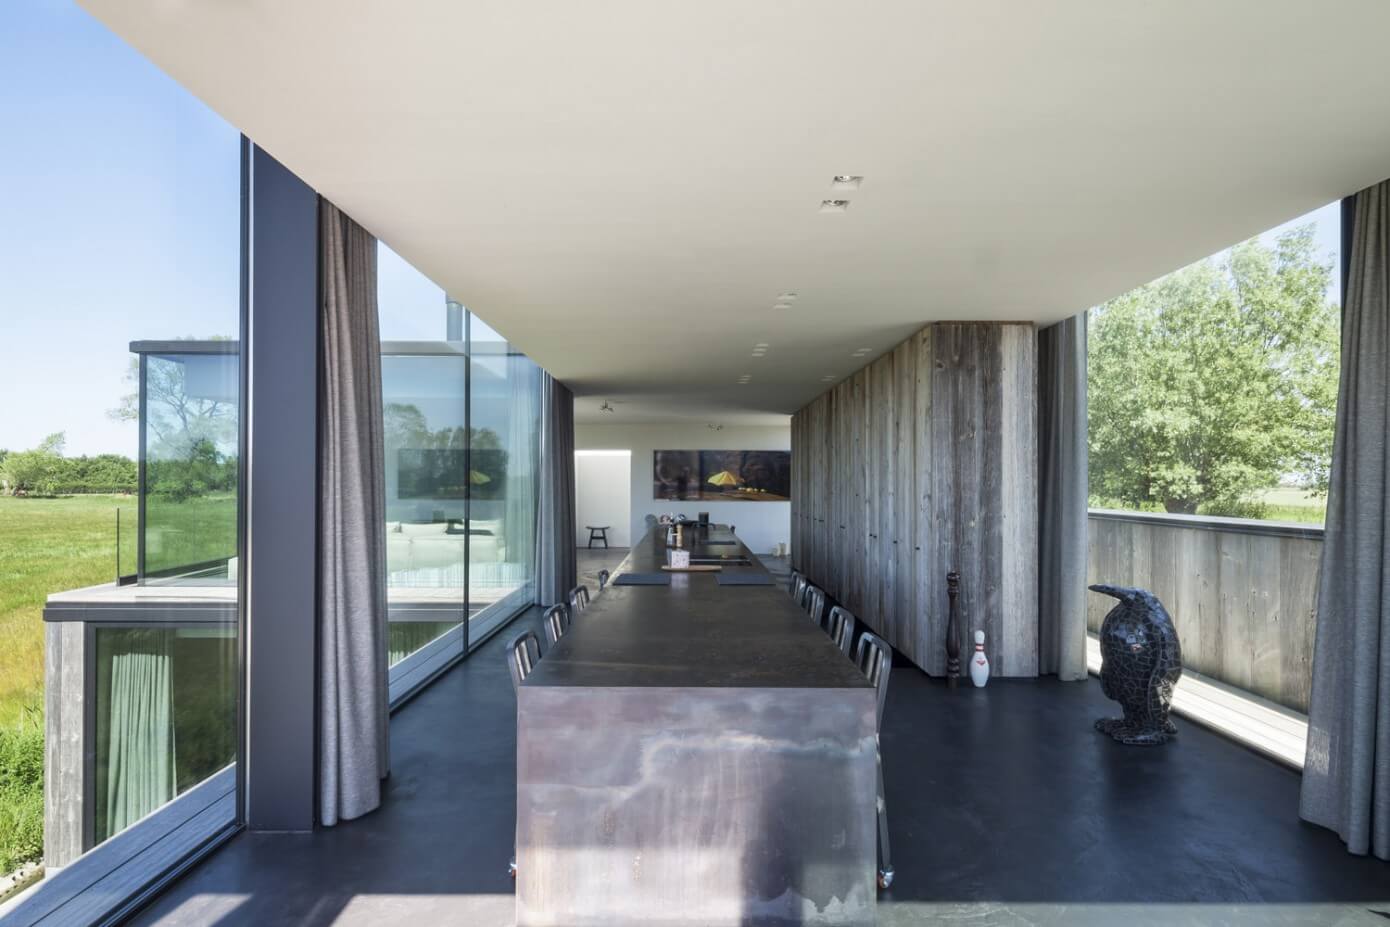 Graafjansdijk House by Govaert & Vanhoutte Architects